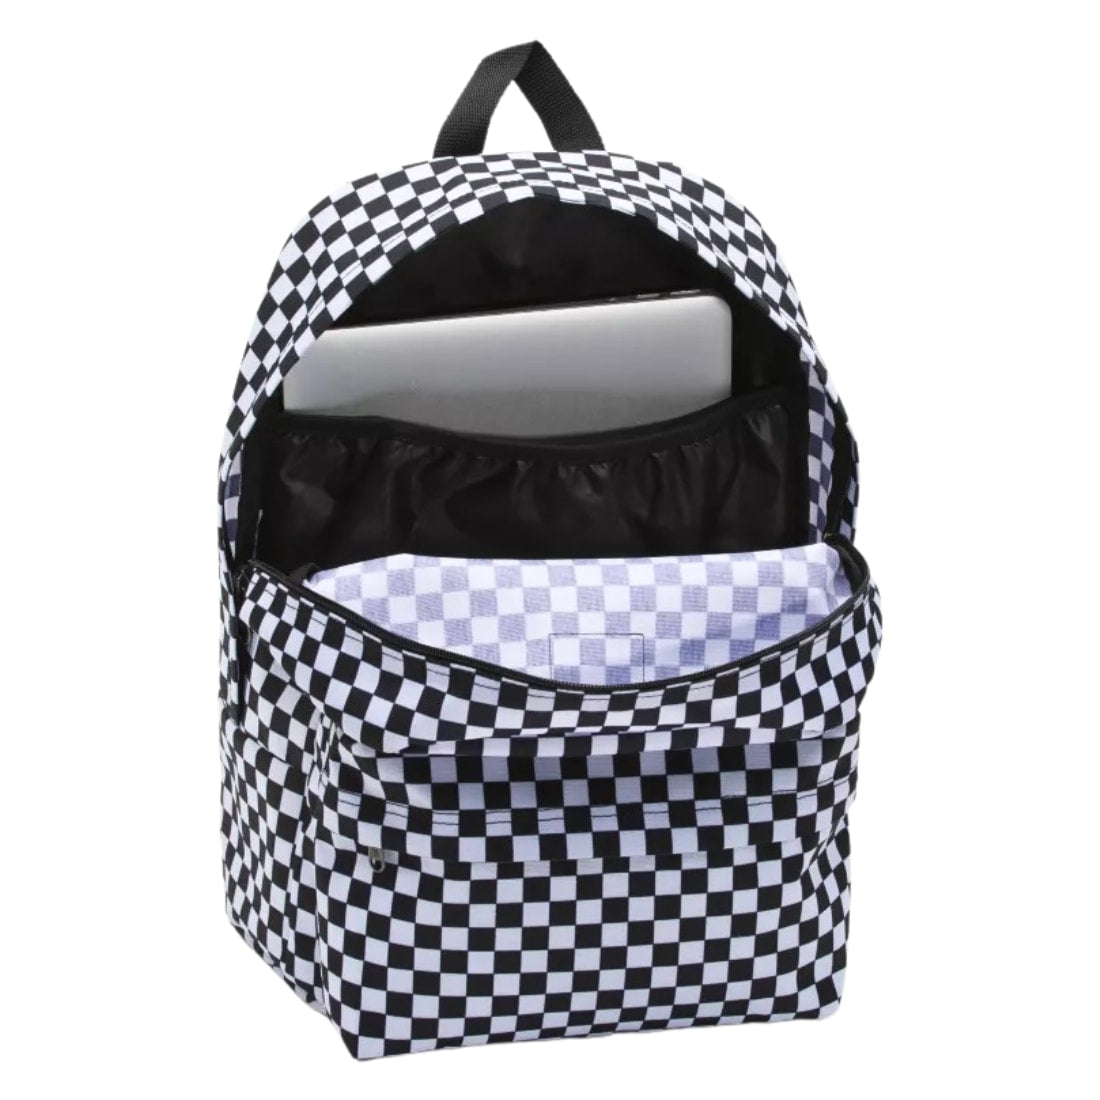 Vans Old Skool Grom Backpack - Black White Checkers